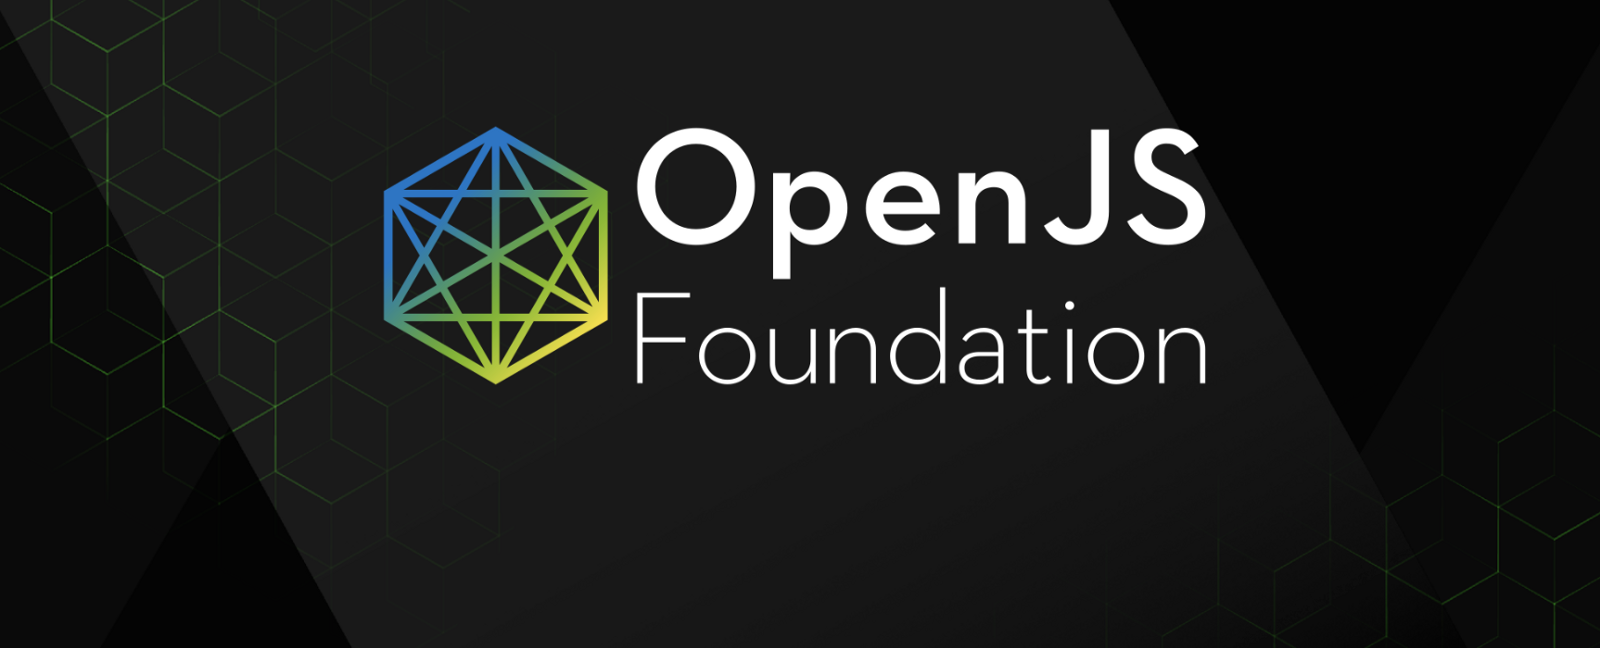 Openjs foundation